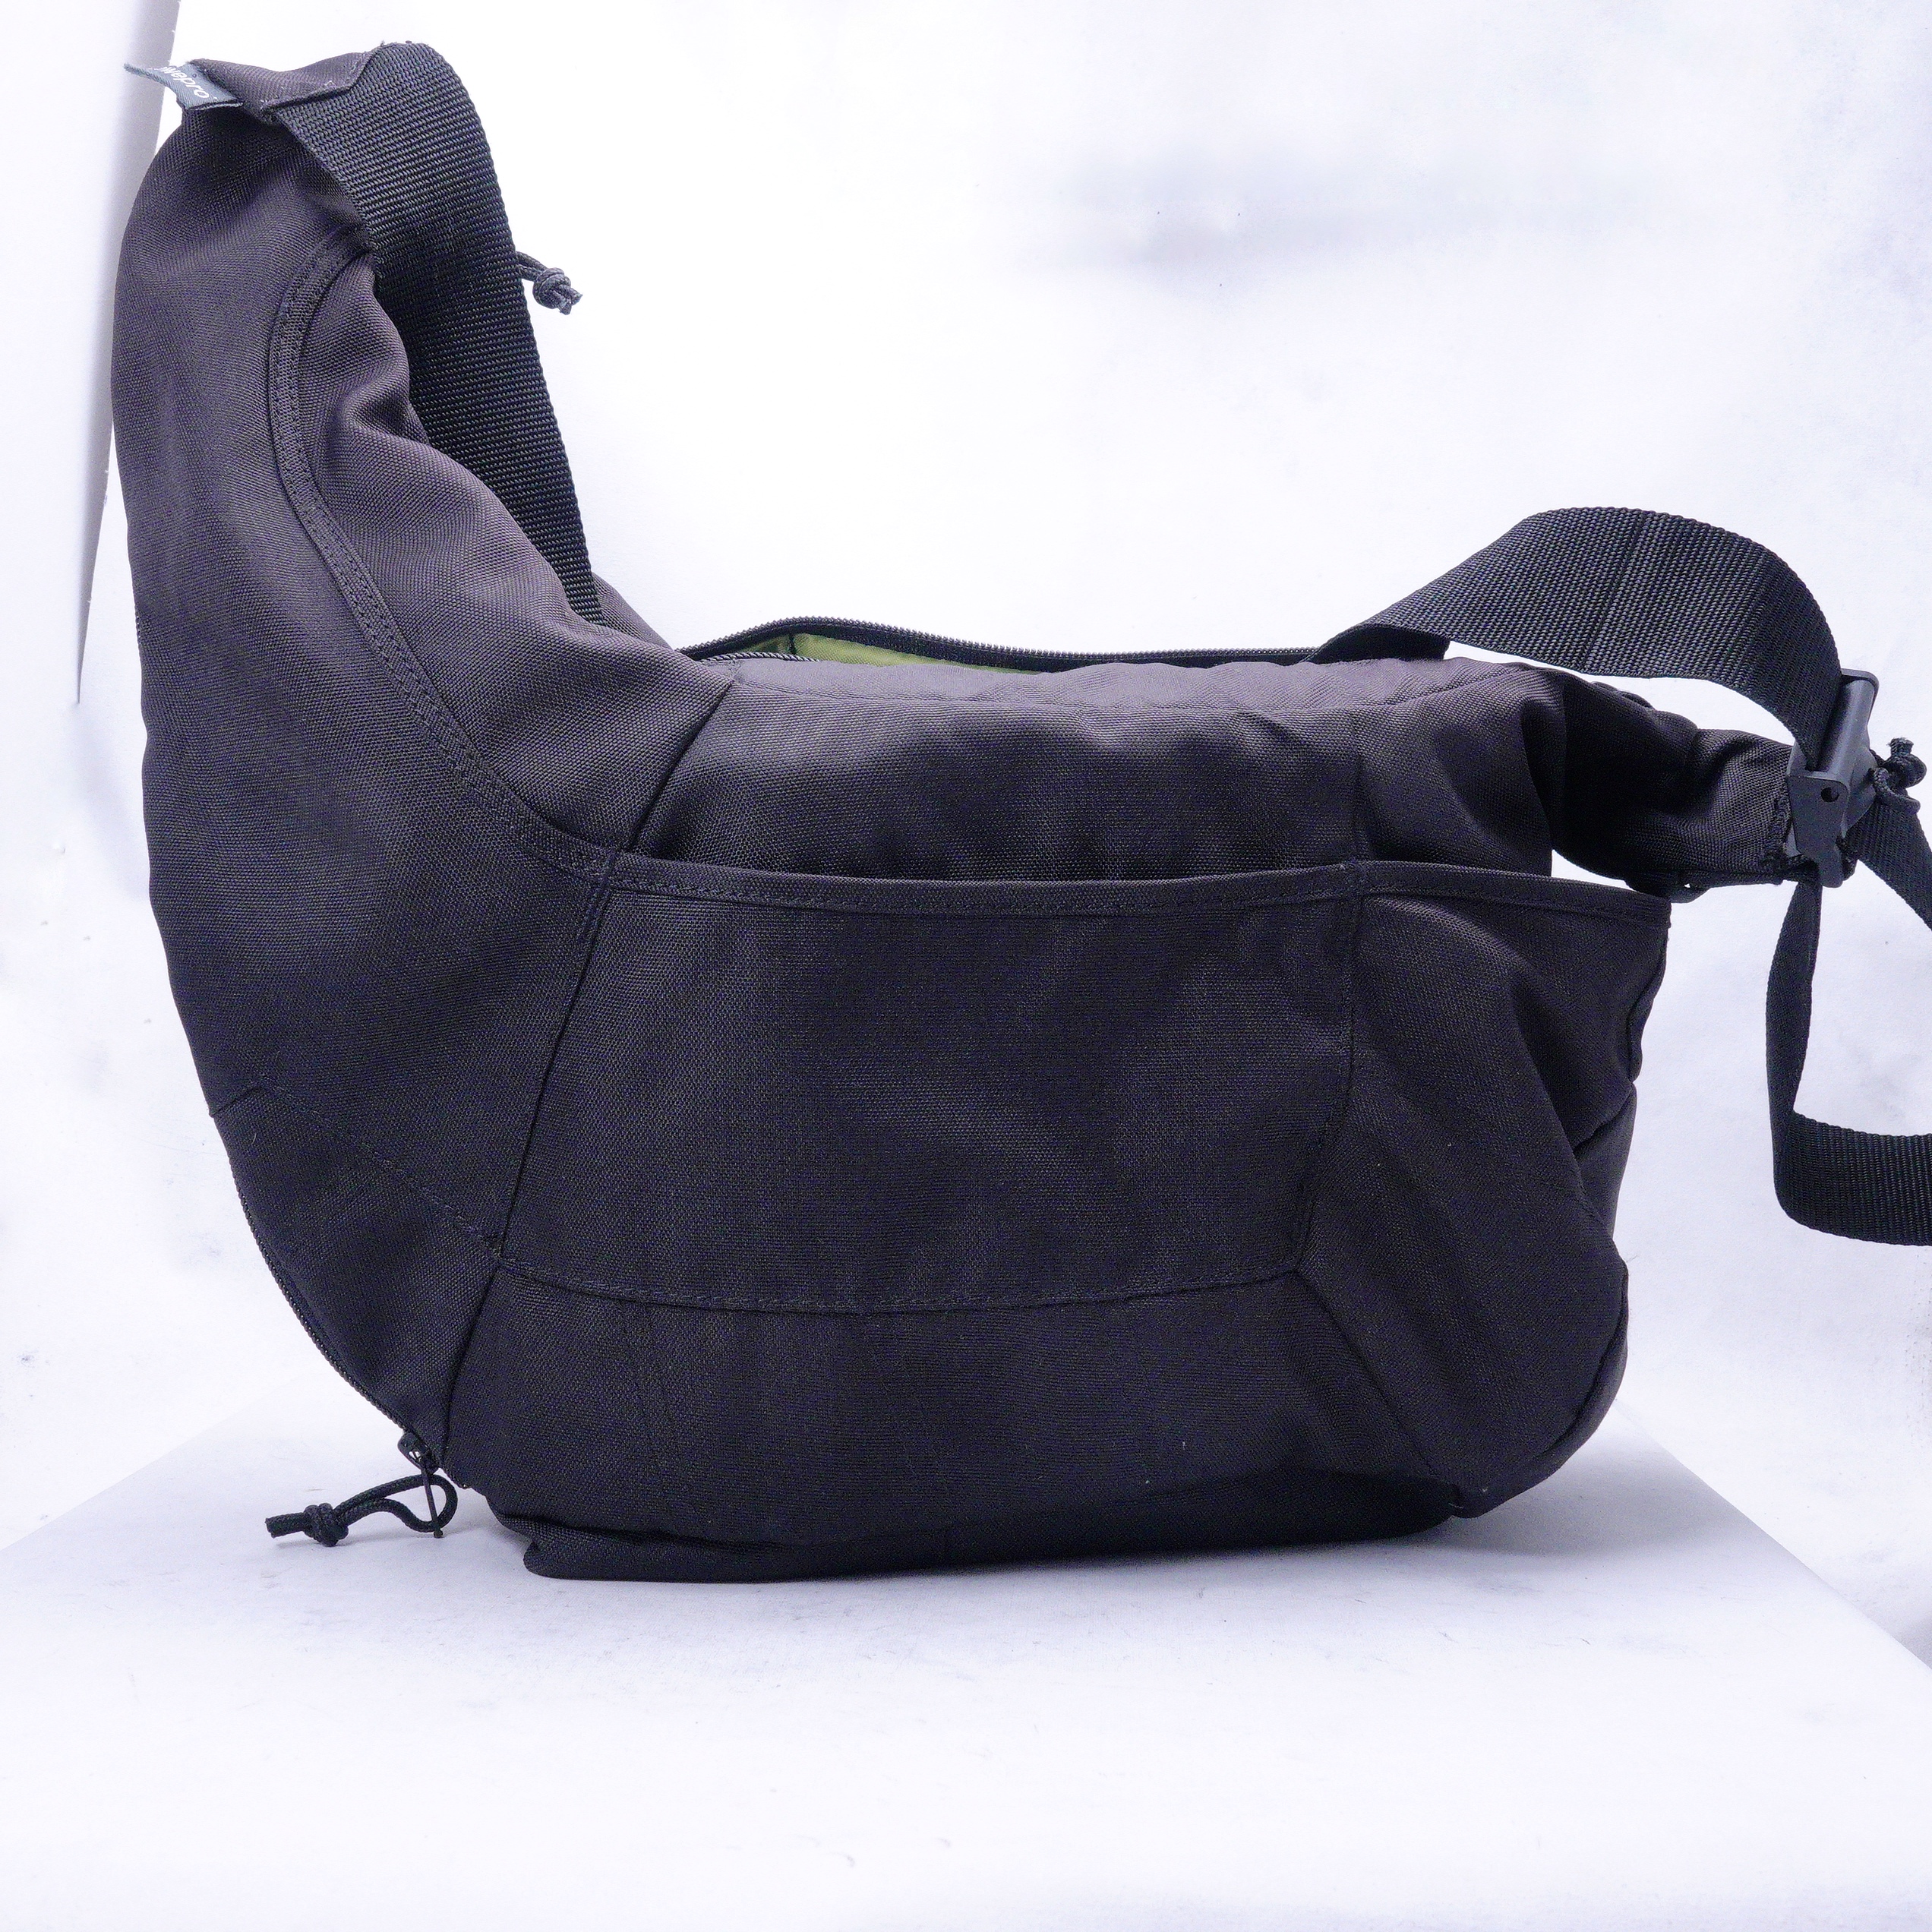 Lowepro Passport Sling Camera Bag (Black) - Usado